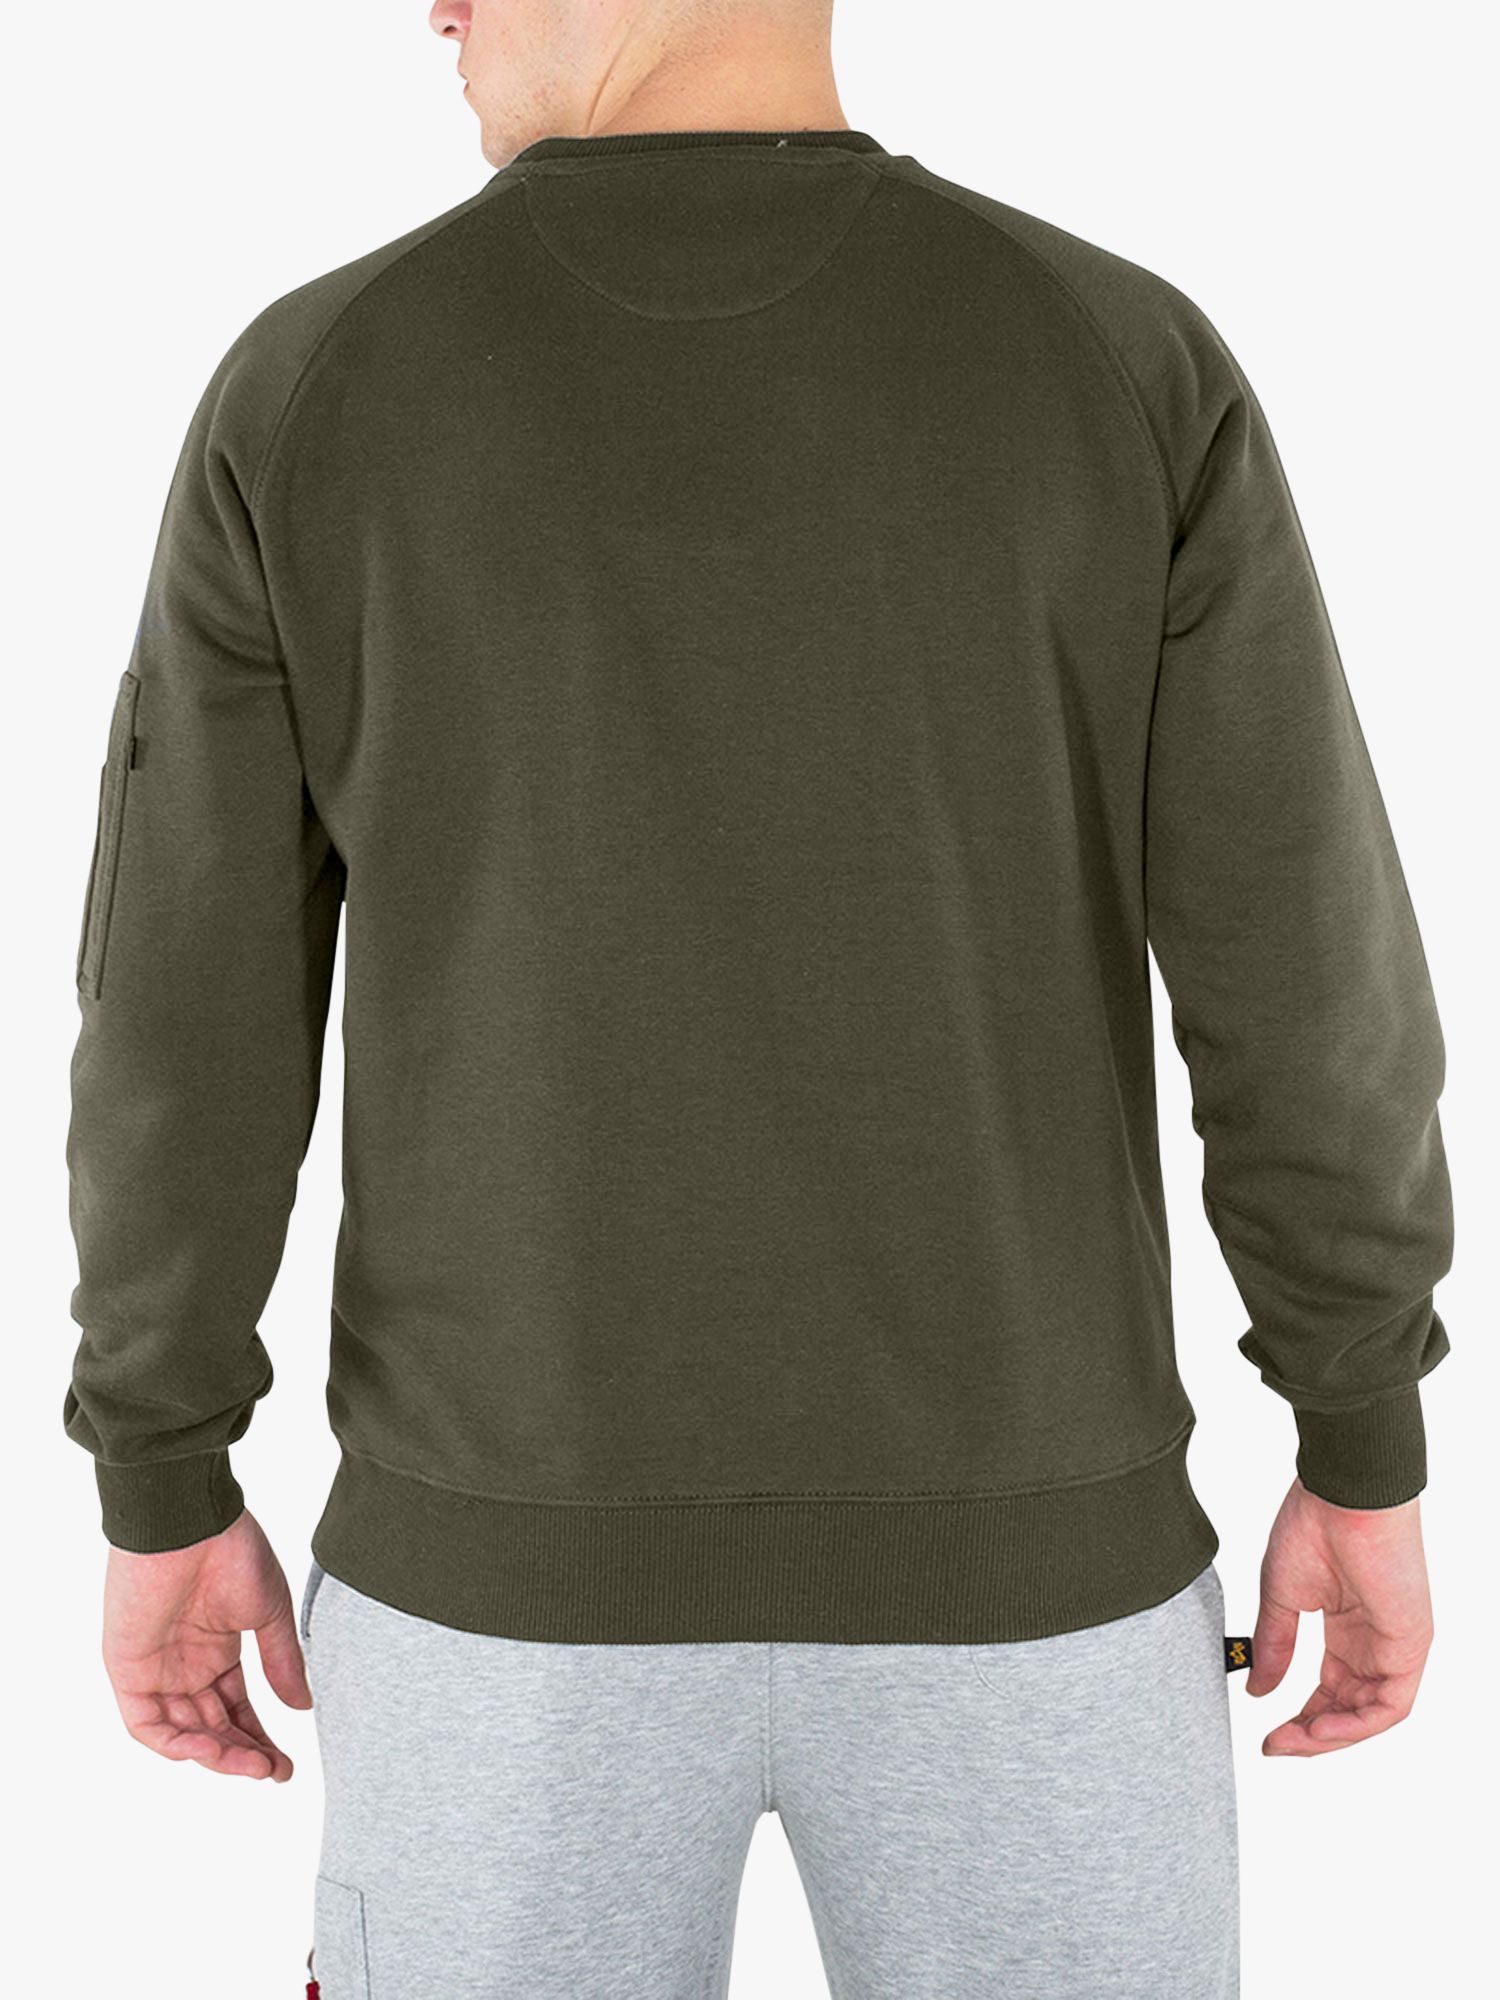 Pocket Partners Sweatshirt, Dark 257 Zip Alpha Industries Lewis John at & Green Sleeve X-Fit